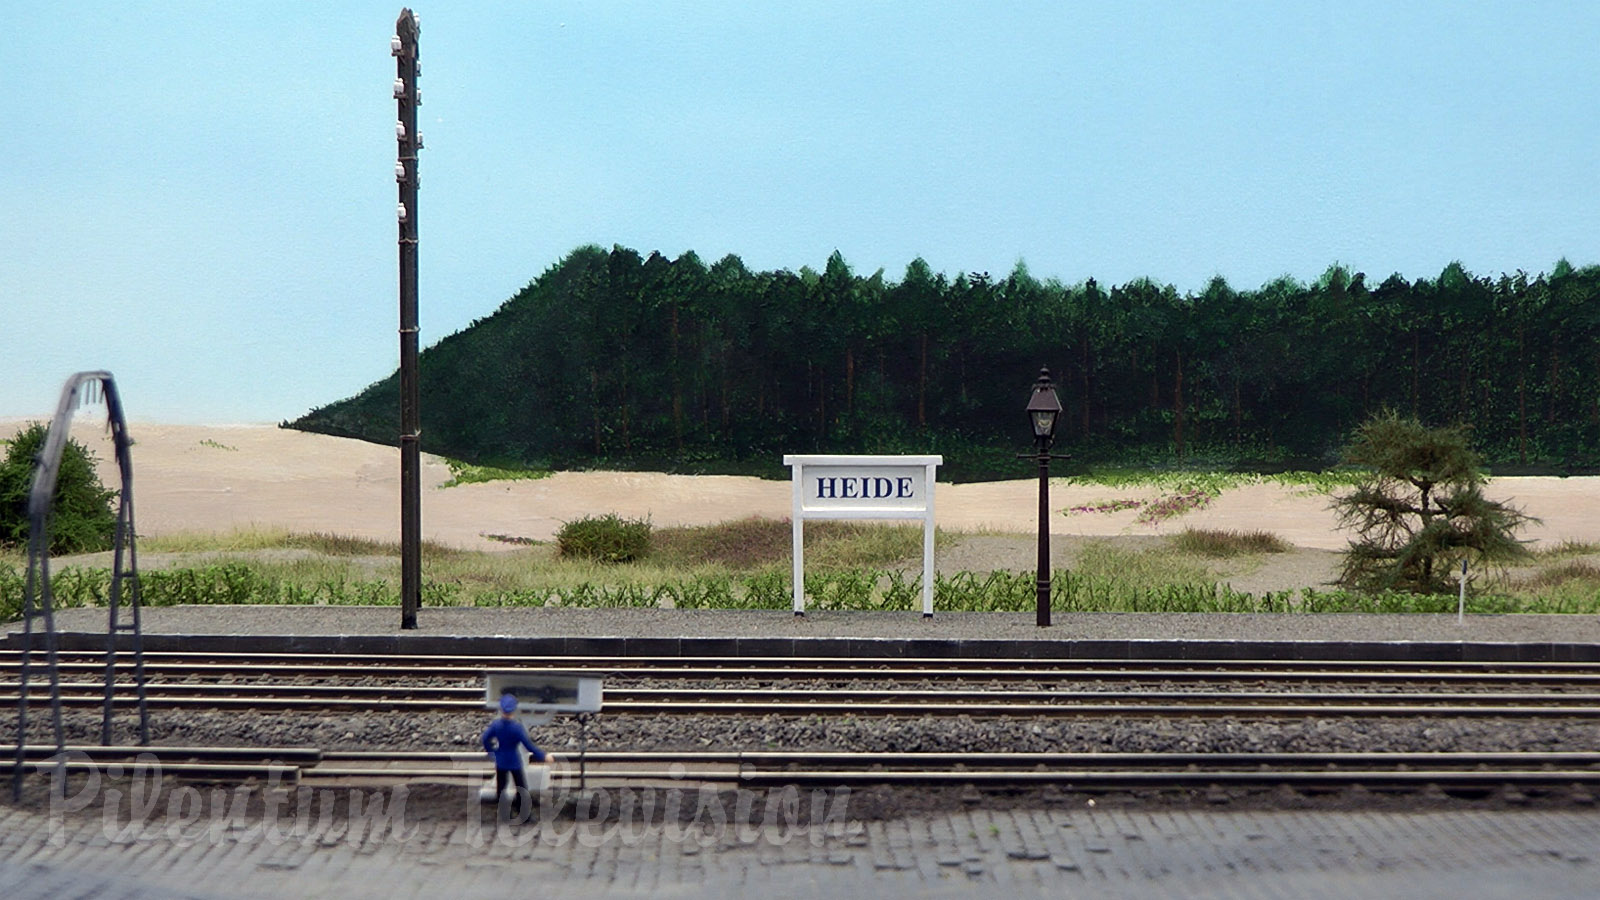 Steam Locomotives at Heide Railway Station in Belgium - Model Railroad HO scale of Belgian Railways